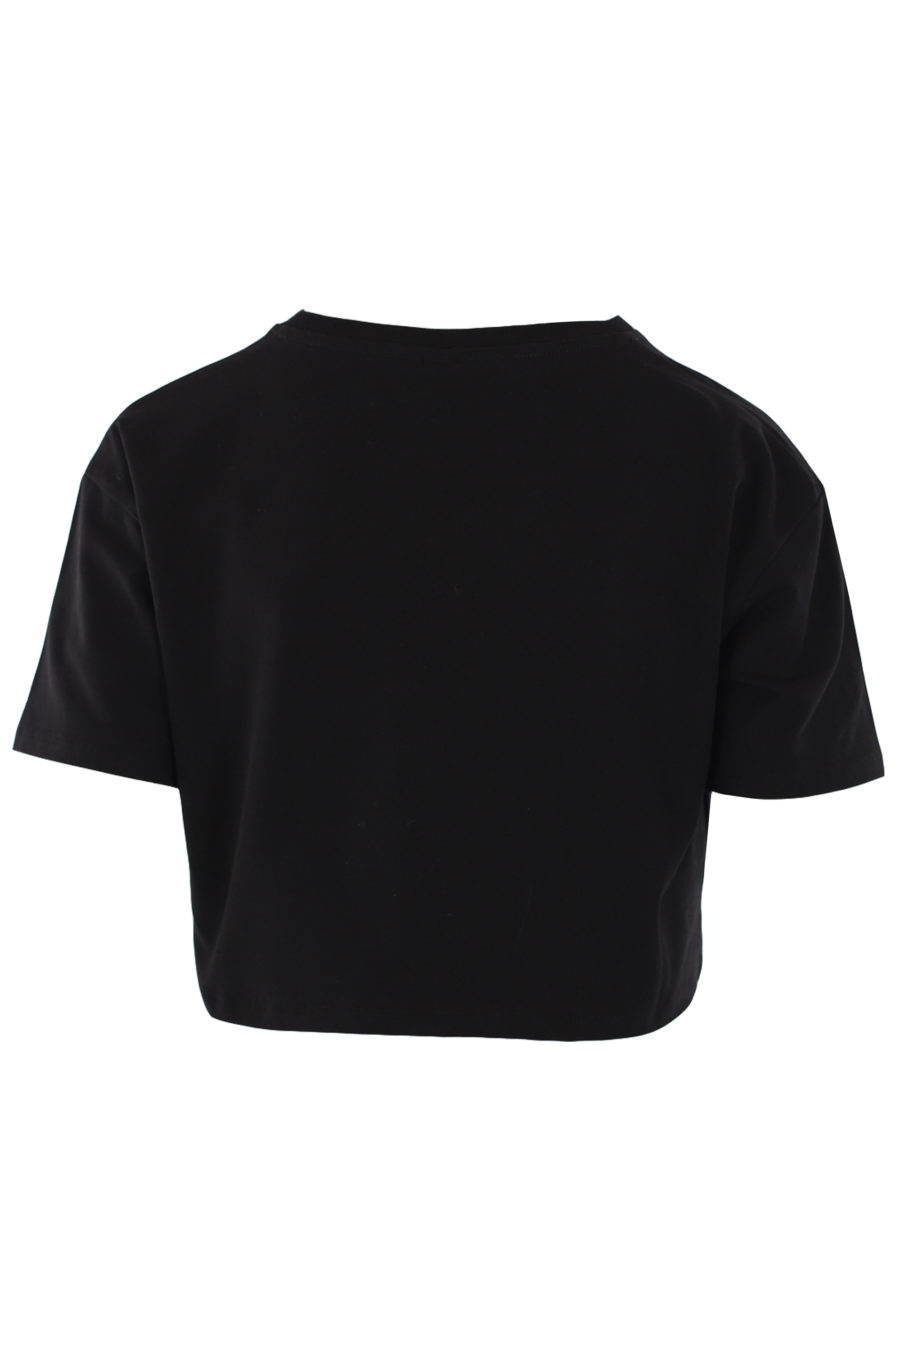 Schwarzes kurzes T-Shirt mit mehrfarbigem Strandlogo - IMG 0748